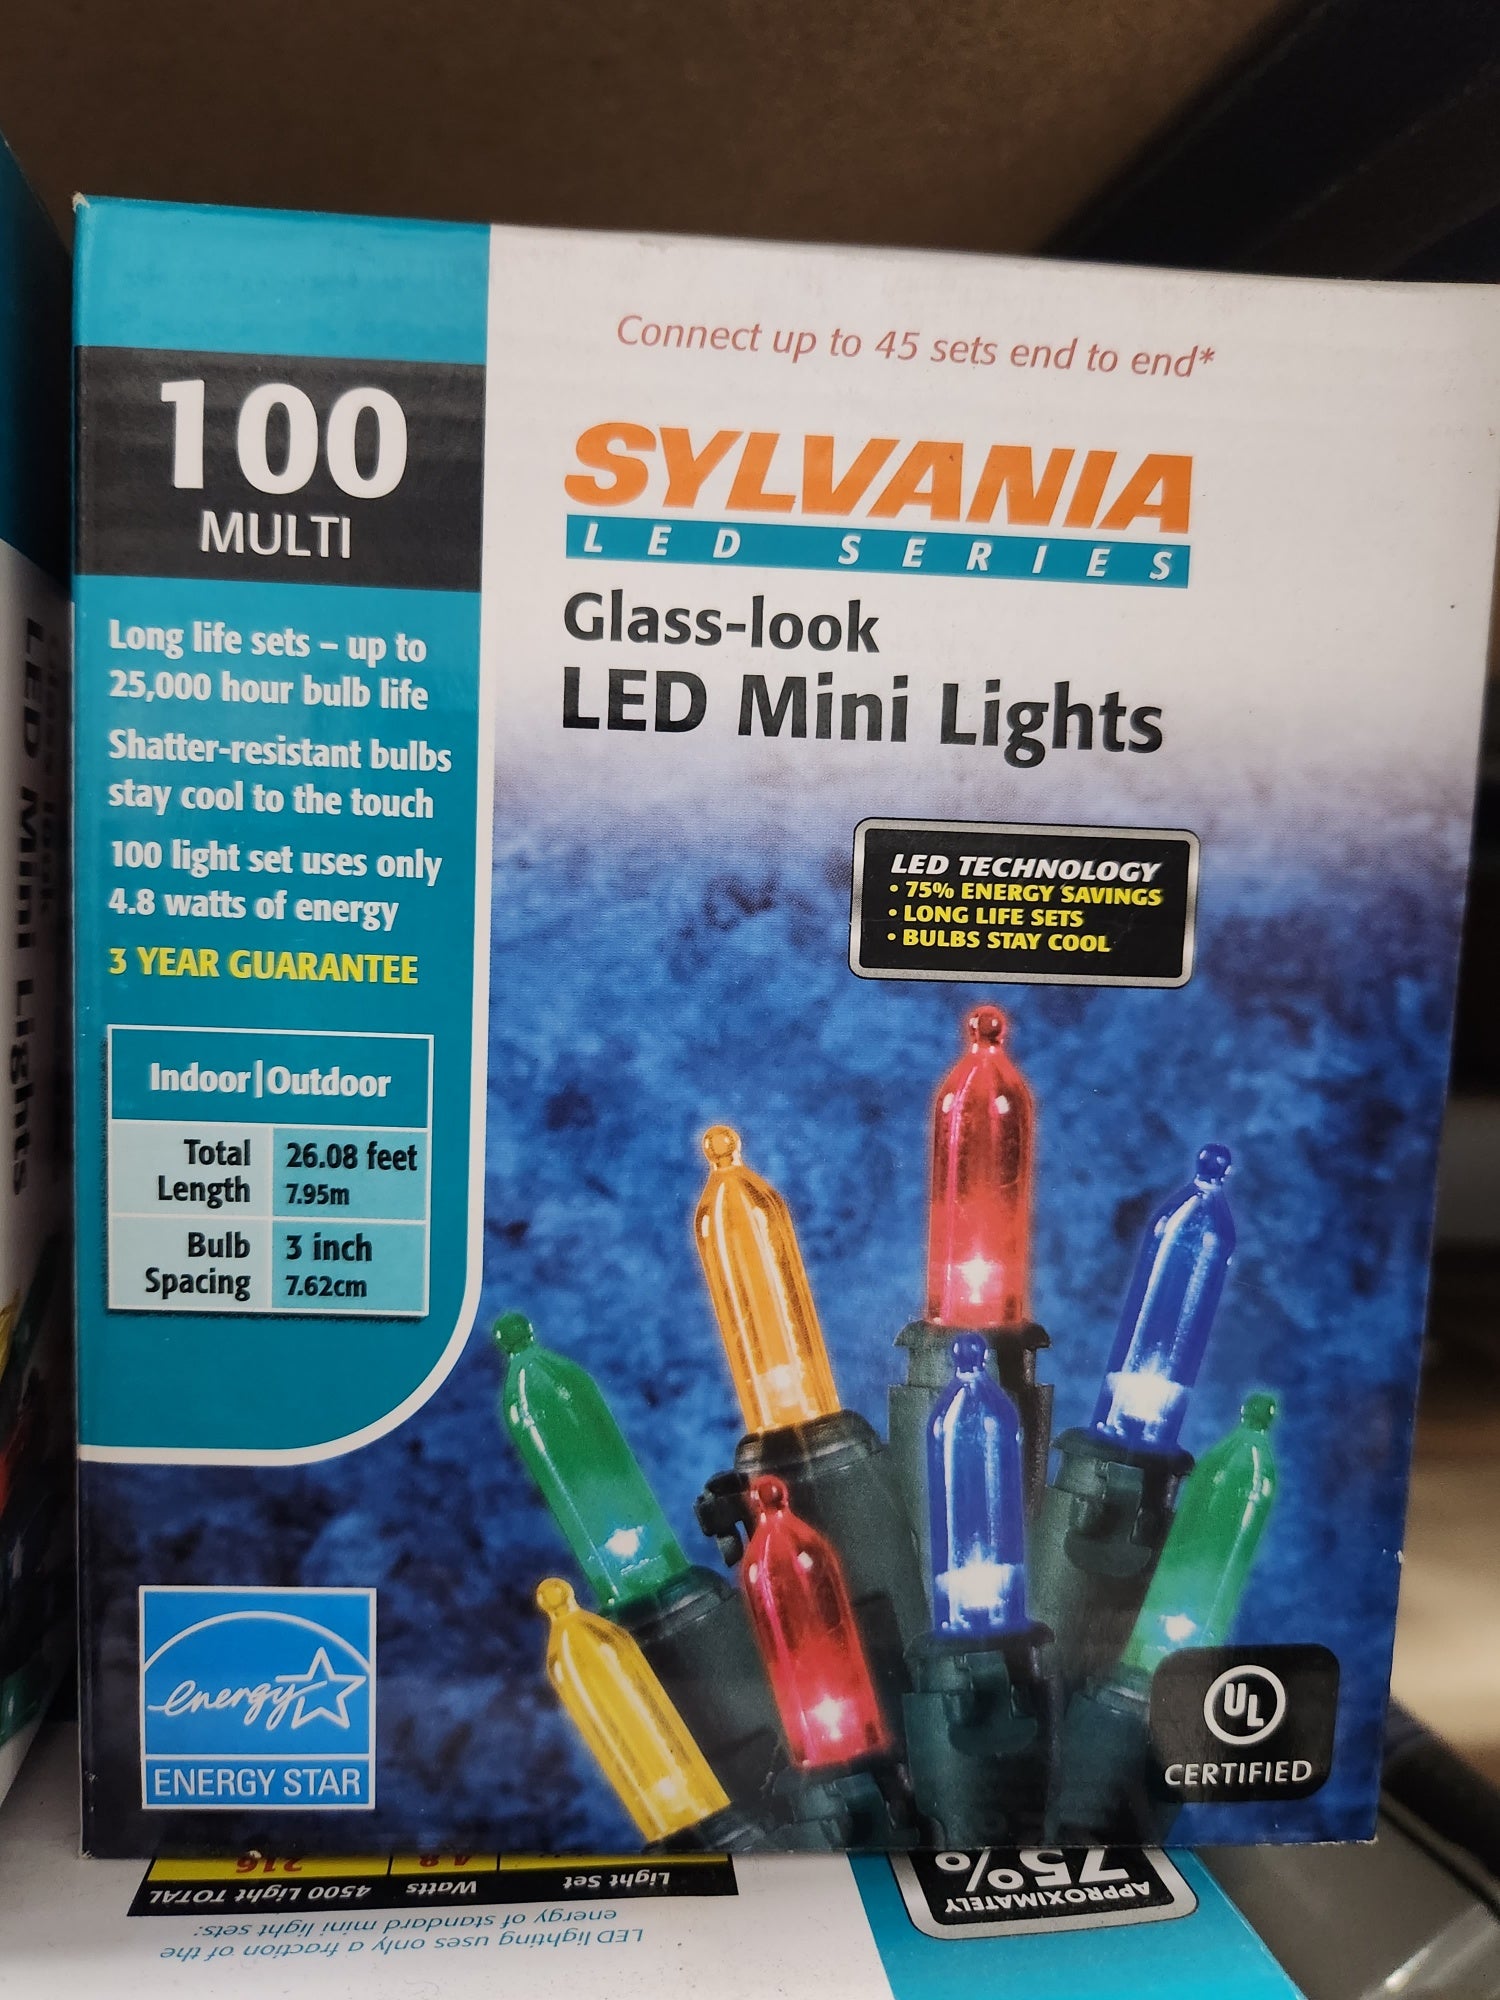 Sylvania LED Series 100 count Glass-Look Multi LED Mini Lights